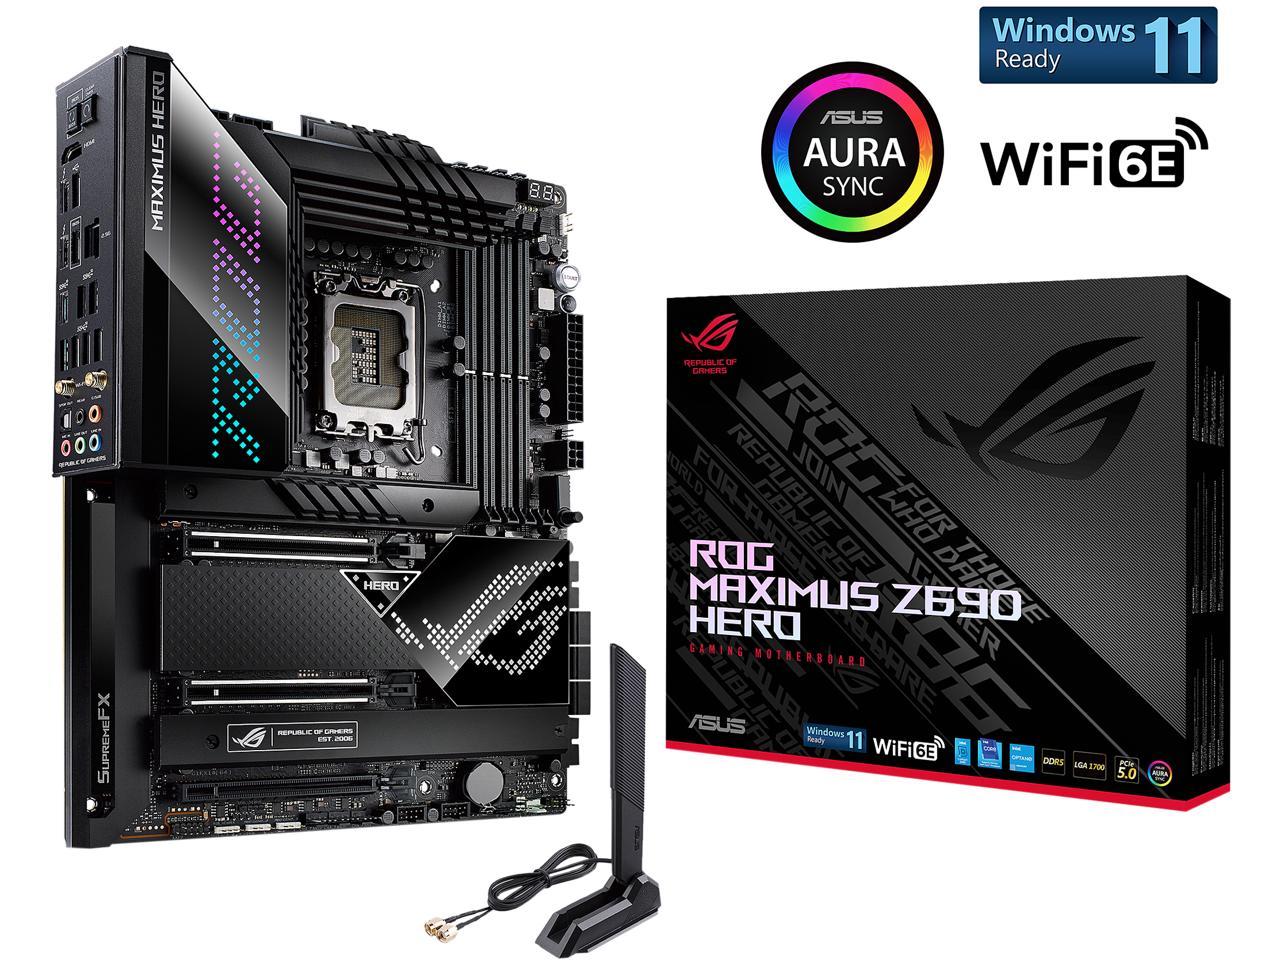 ASUS ROG Maximus Z690 Hero (WiFi 6E) LGA 1700 Intel 12th Gen ATX Gaming Motherboard- PCIe 5.0, DDR5, 20+1 90A Power Stages, 2.5Gb LAN, V5.2, 2x Thunderbolt 4 ports, 5xM.2 $599.99